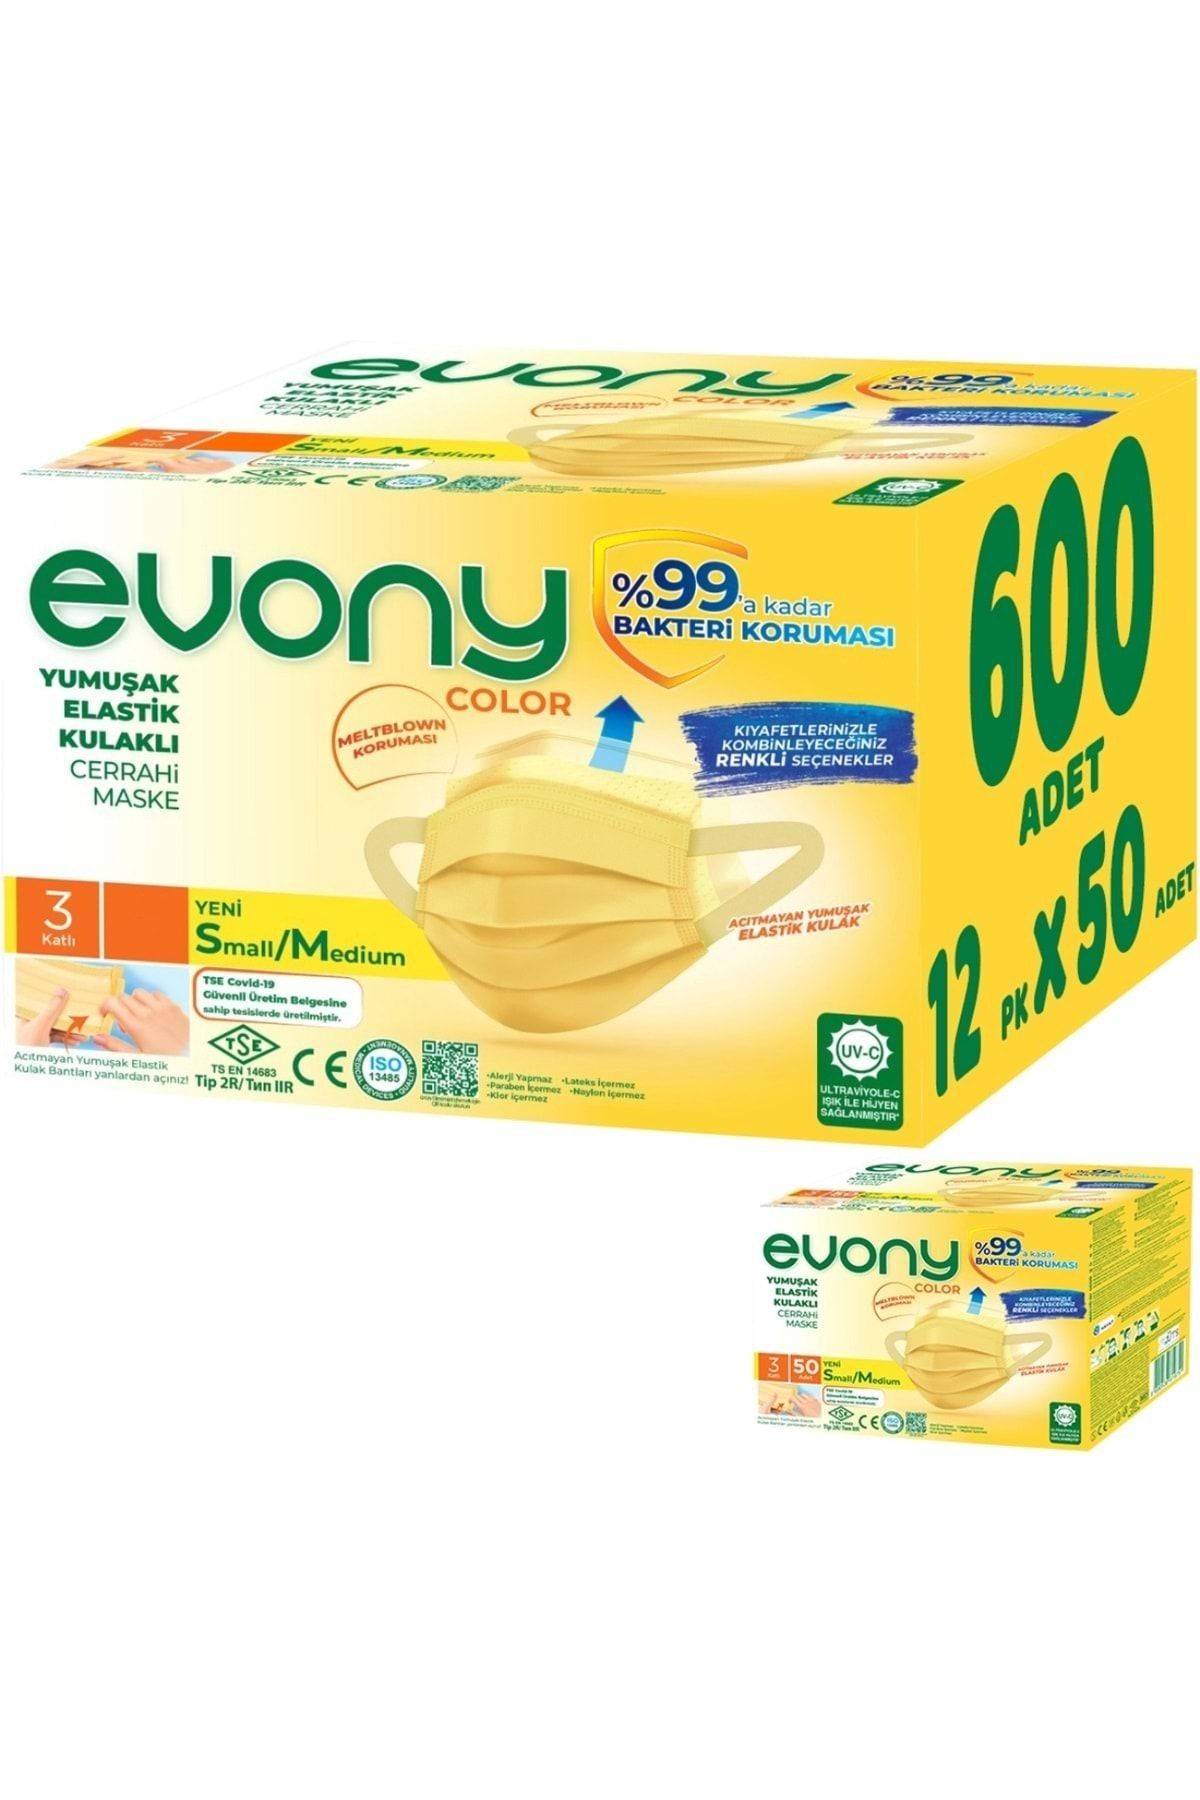 Evony 3 Katlı Filtreli Burun Telli Cerrahi Maske 600 Lü Set Small/medium Sarı 160*90mm (12pk*50)